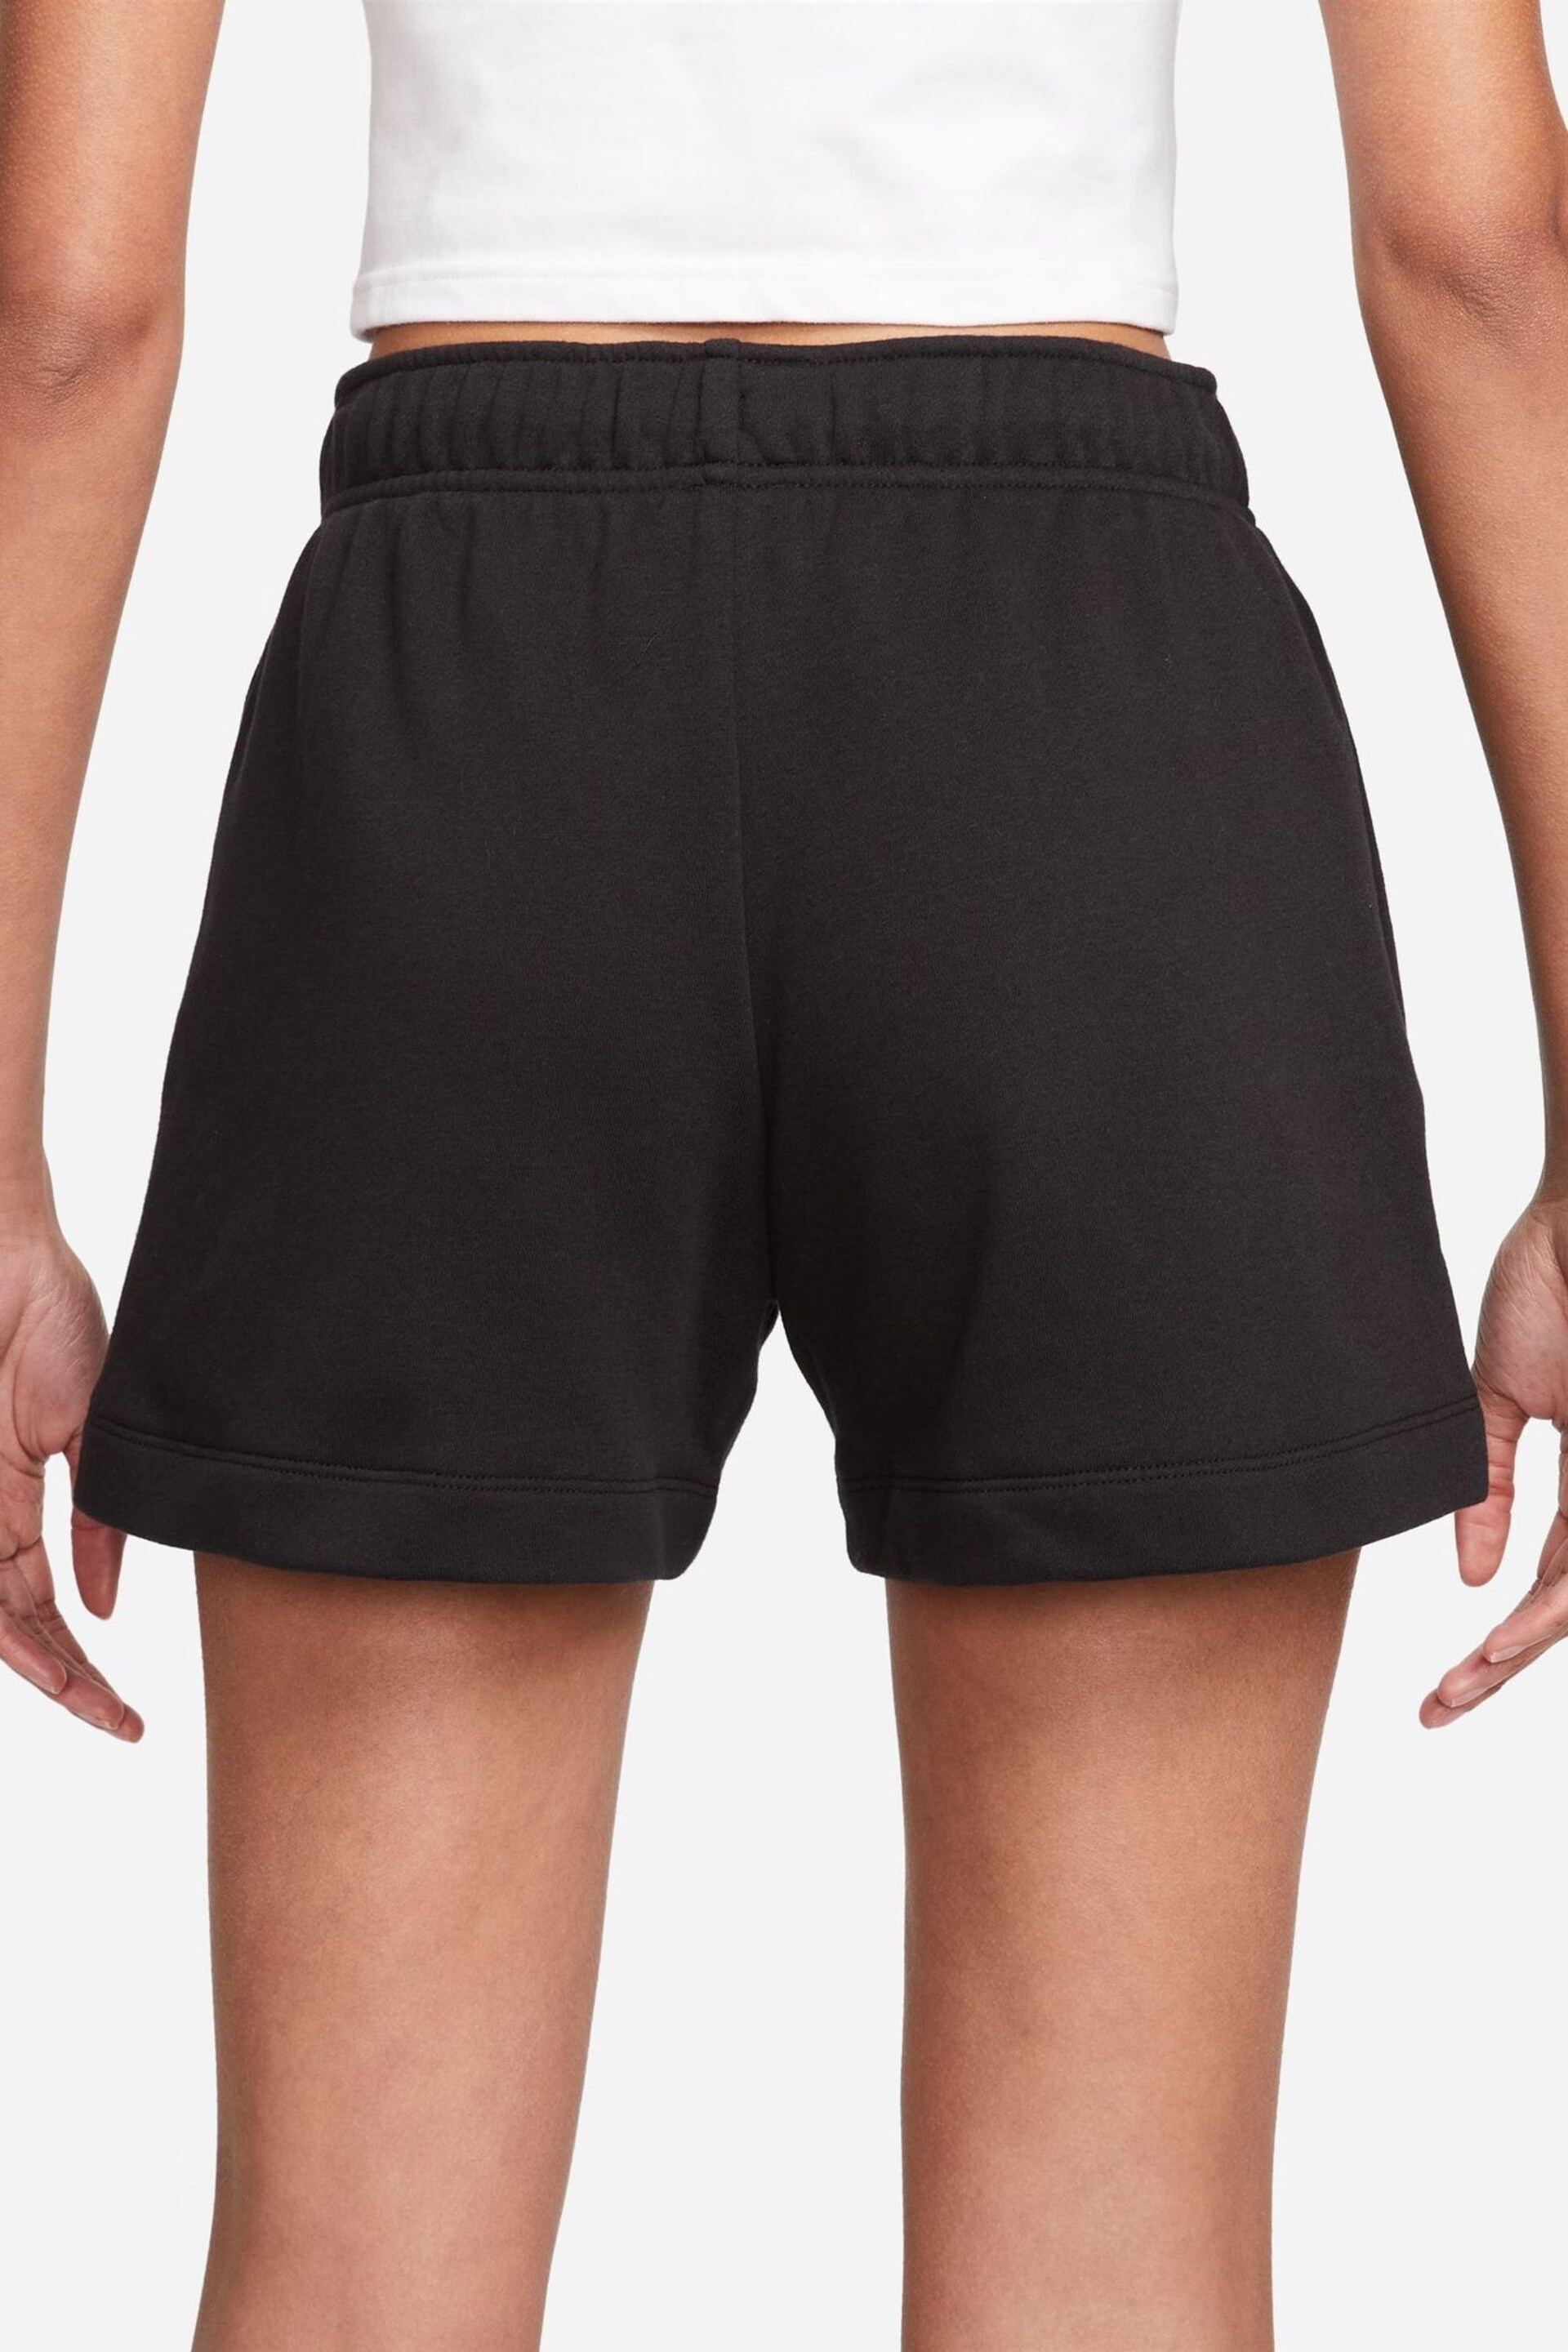 Nike Black Club Fleece Shorts - Image 2 of 7